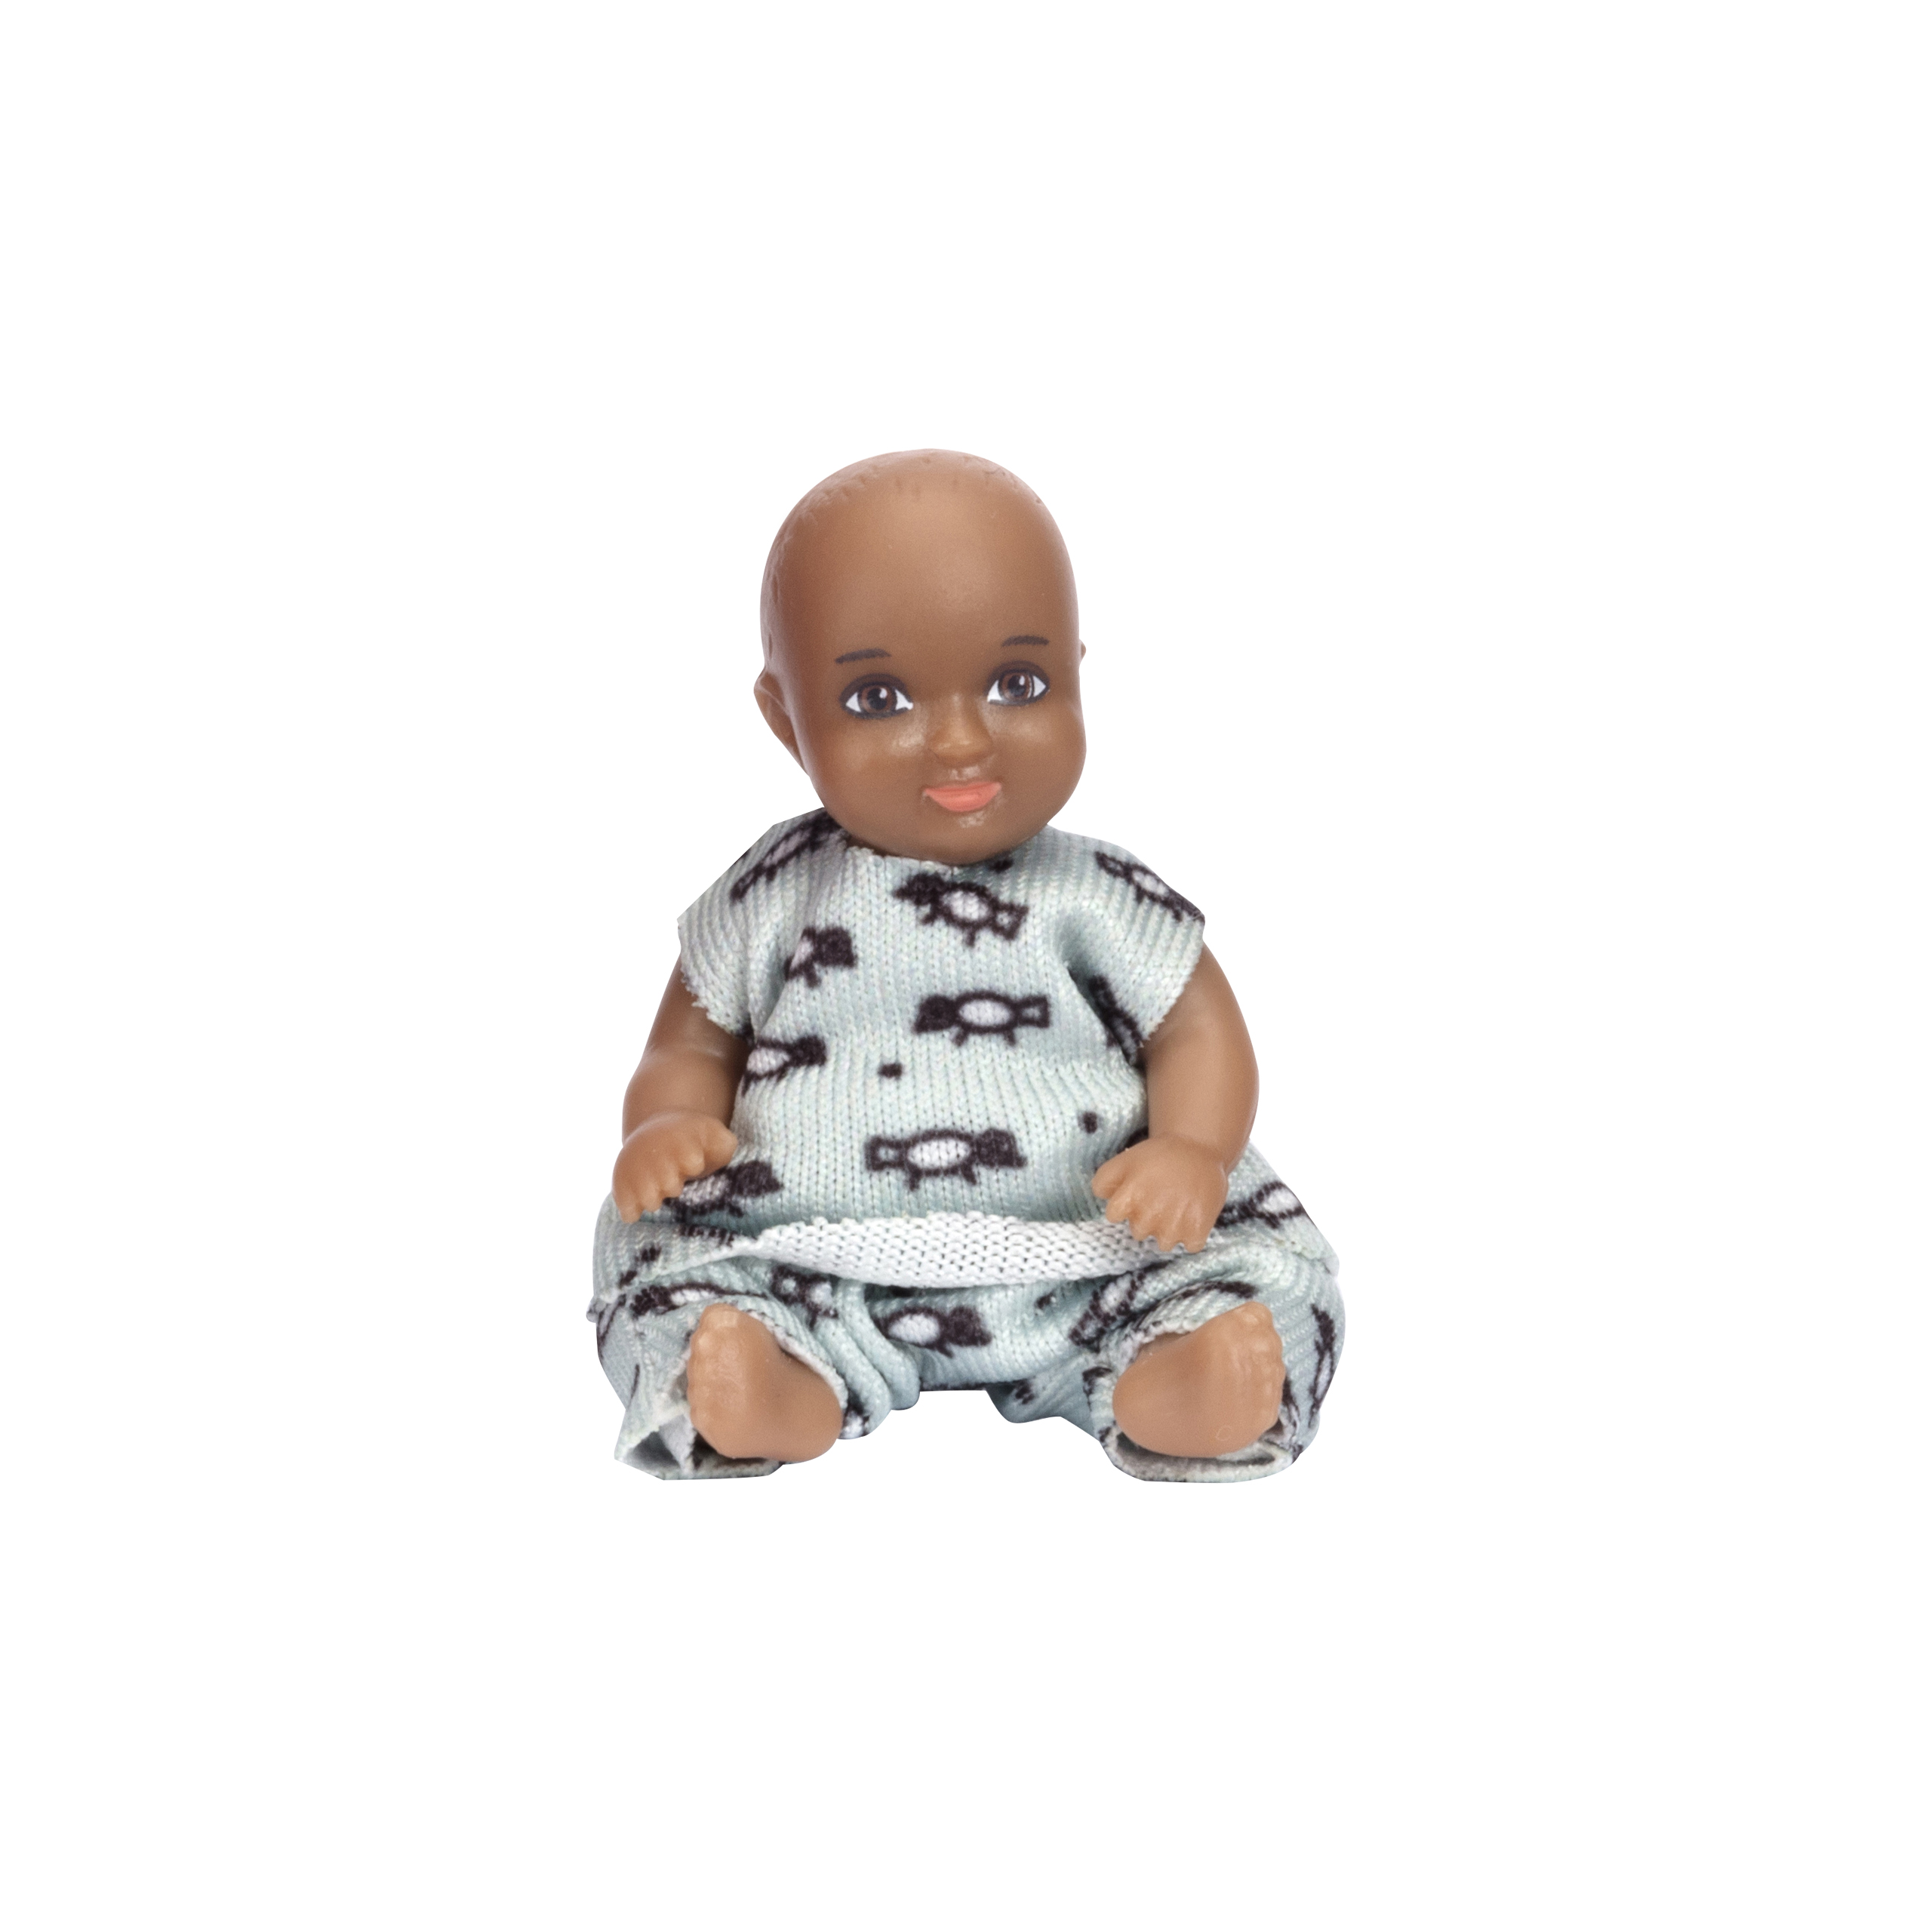 Dark-skinned dolls lundby dollhouse doll nikki baby